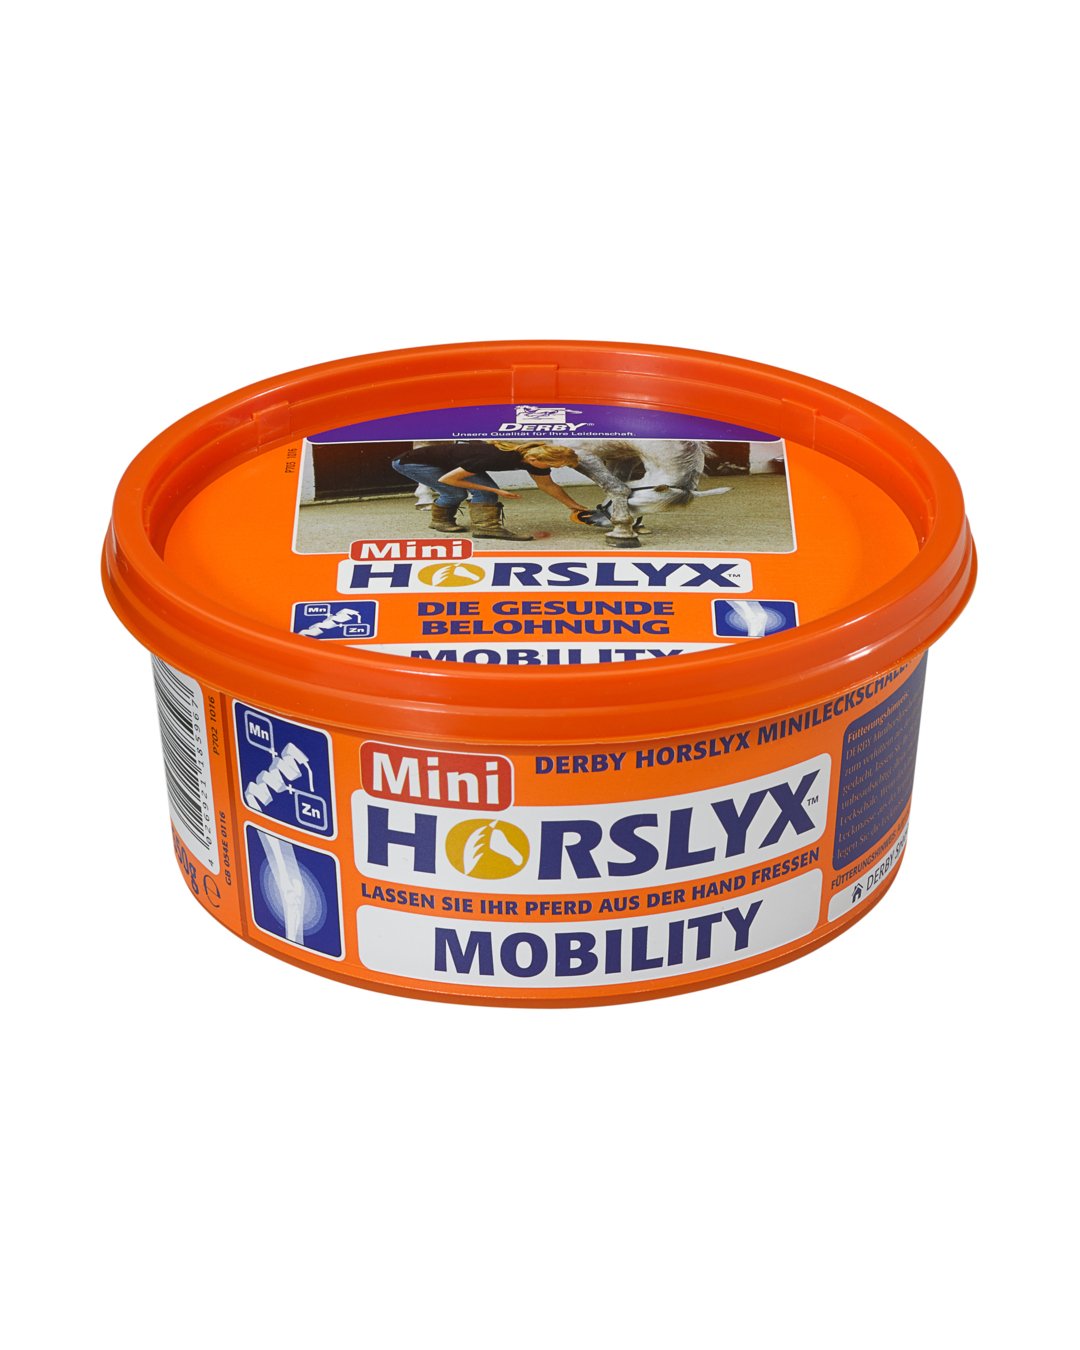 Leckmasse Horslyx Mobility Schale 650G